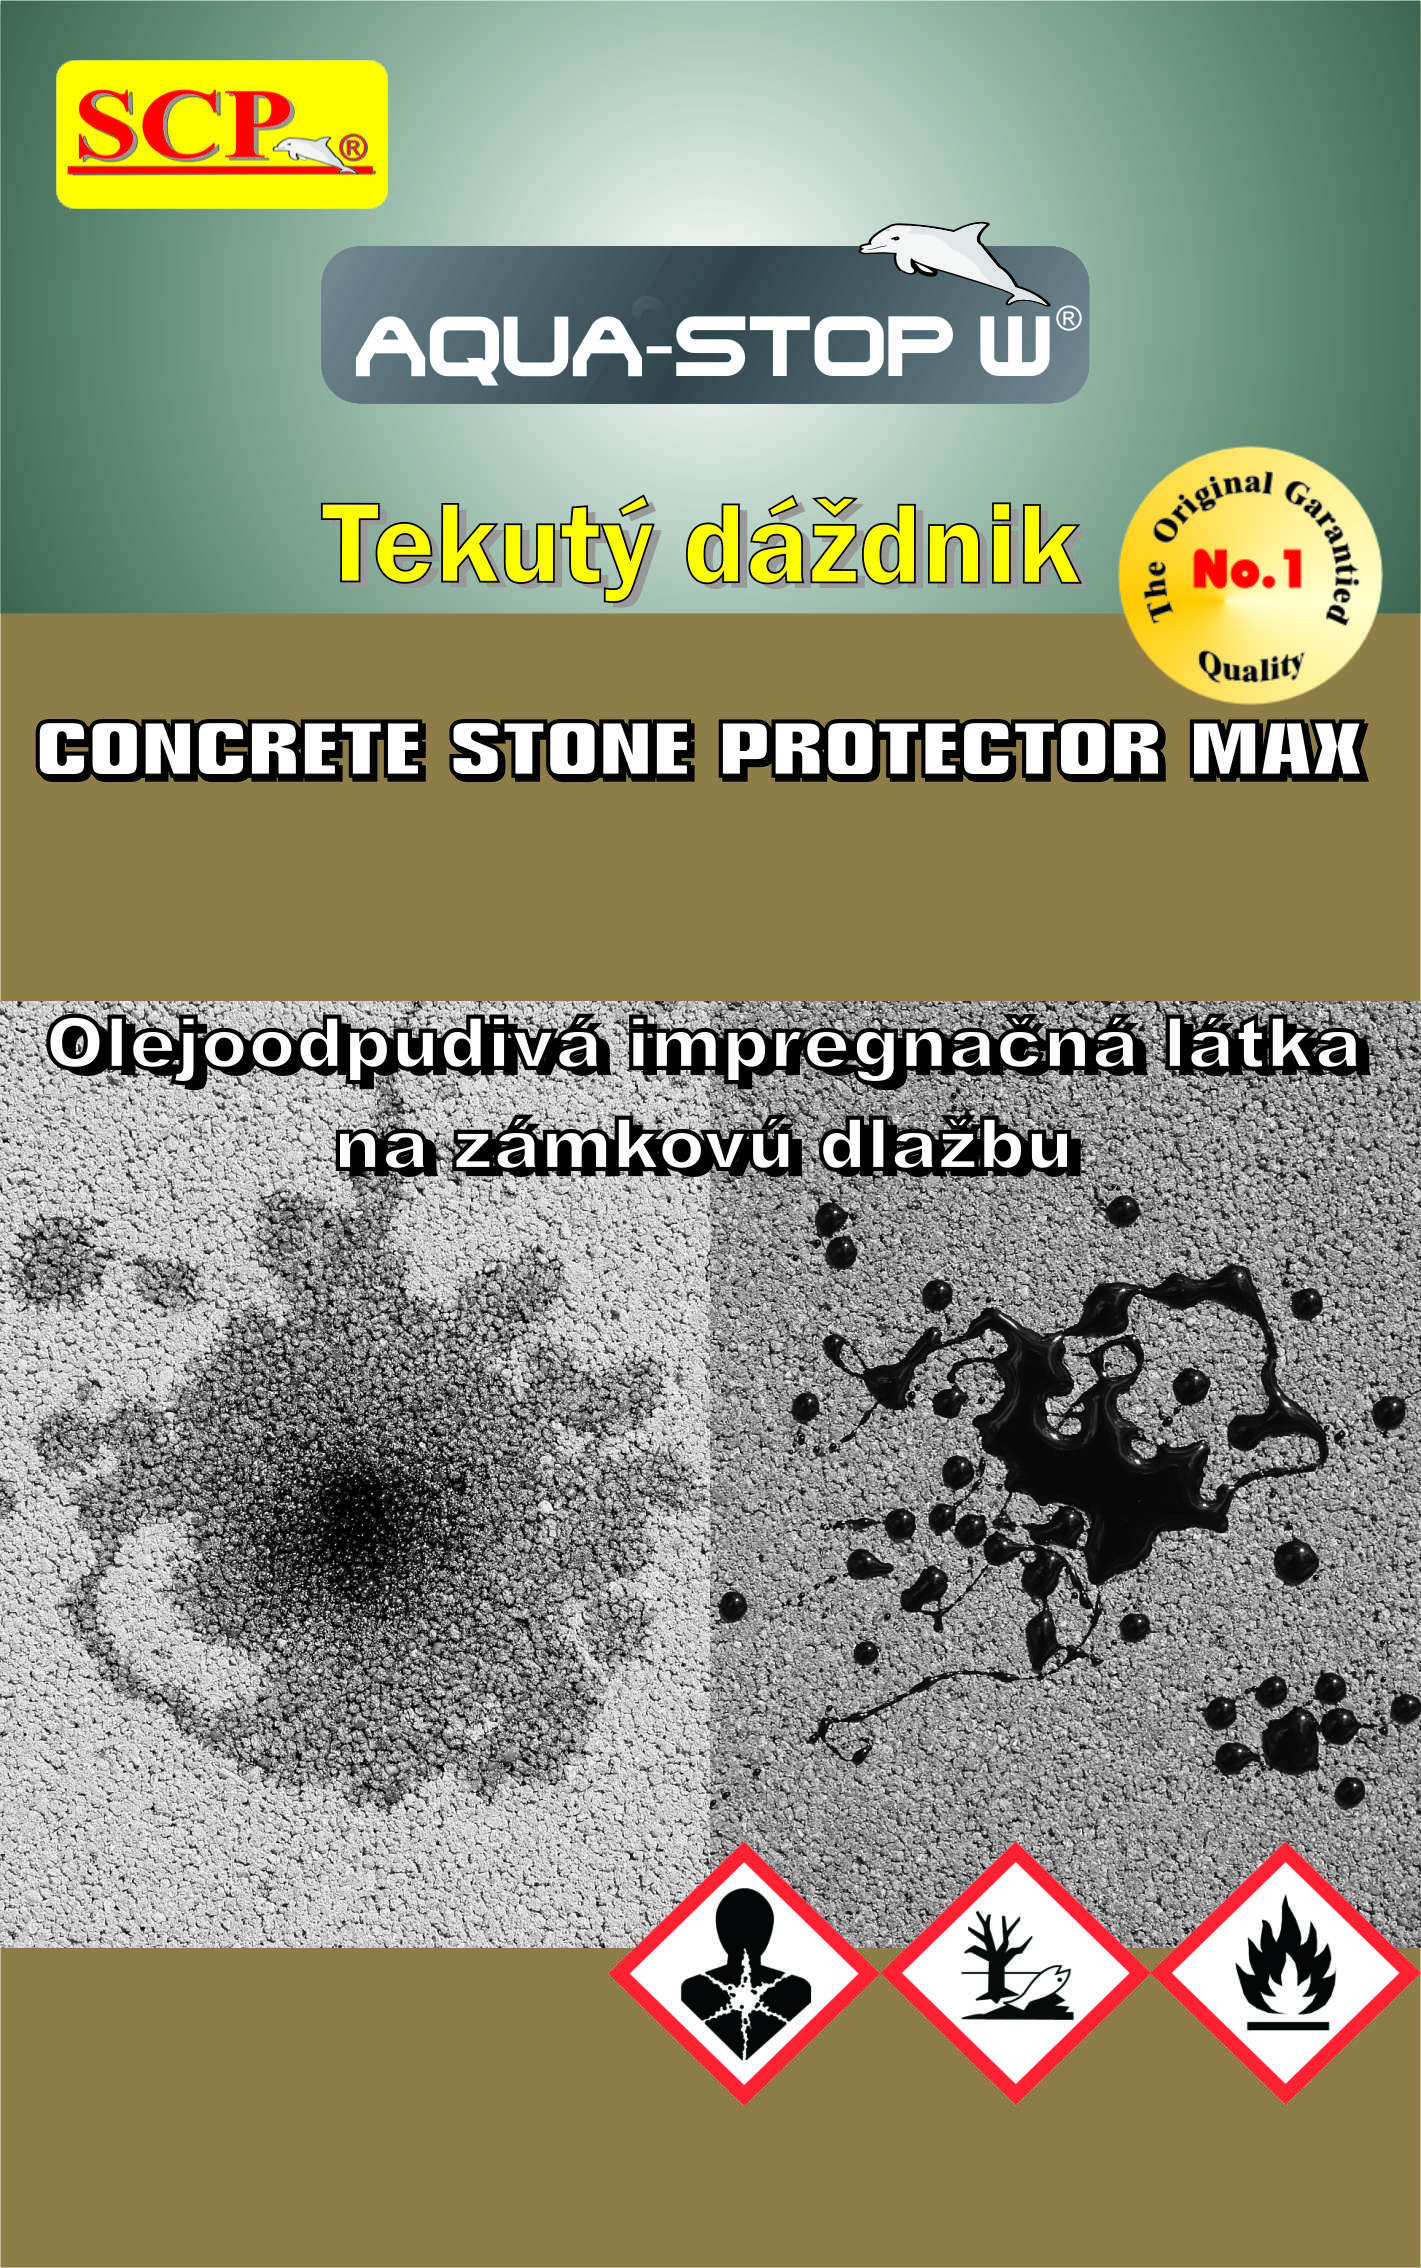 Conctrete Stone Protector Max